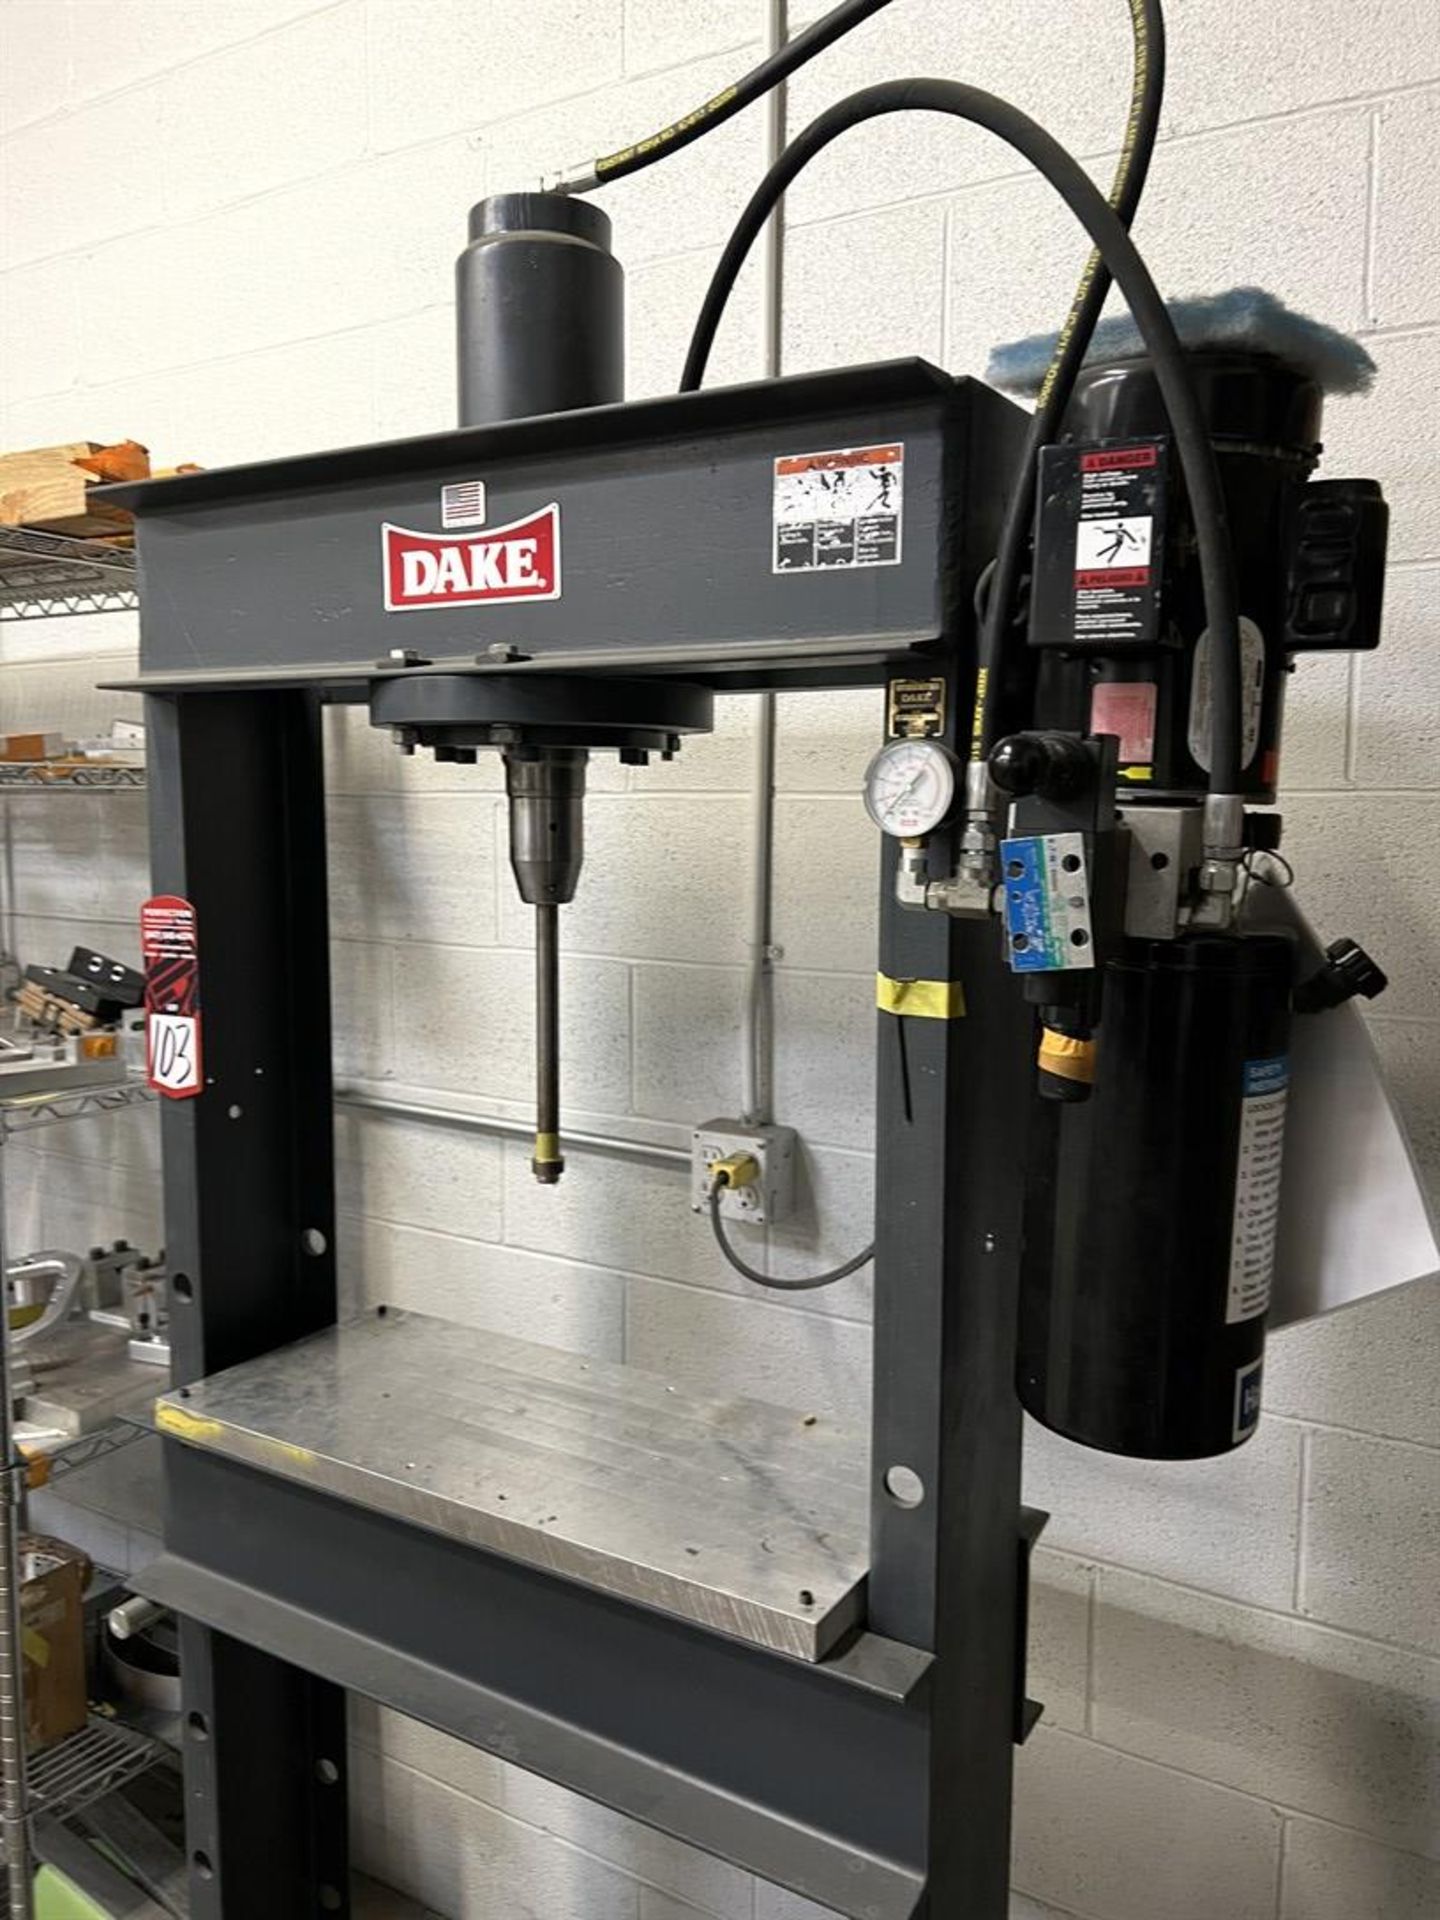 DAKE 909215 25-Ton H-Frame Hydraulic Shop Press, s/n 1178170 - Image 4 of 6